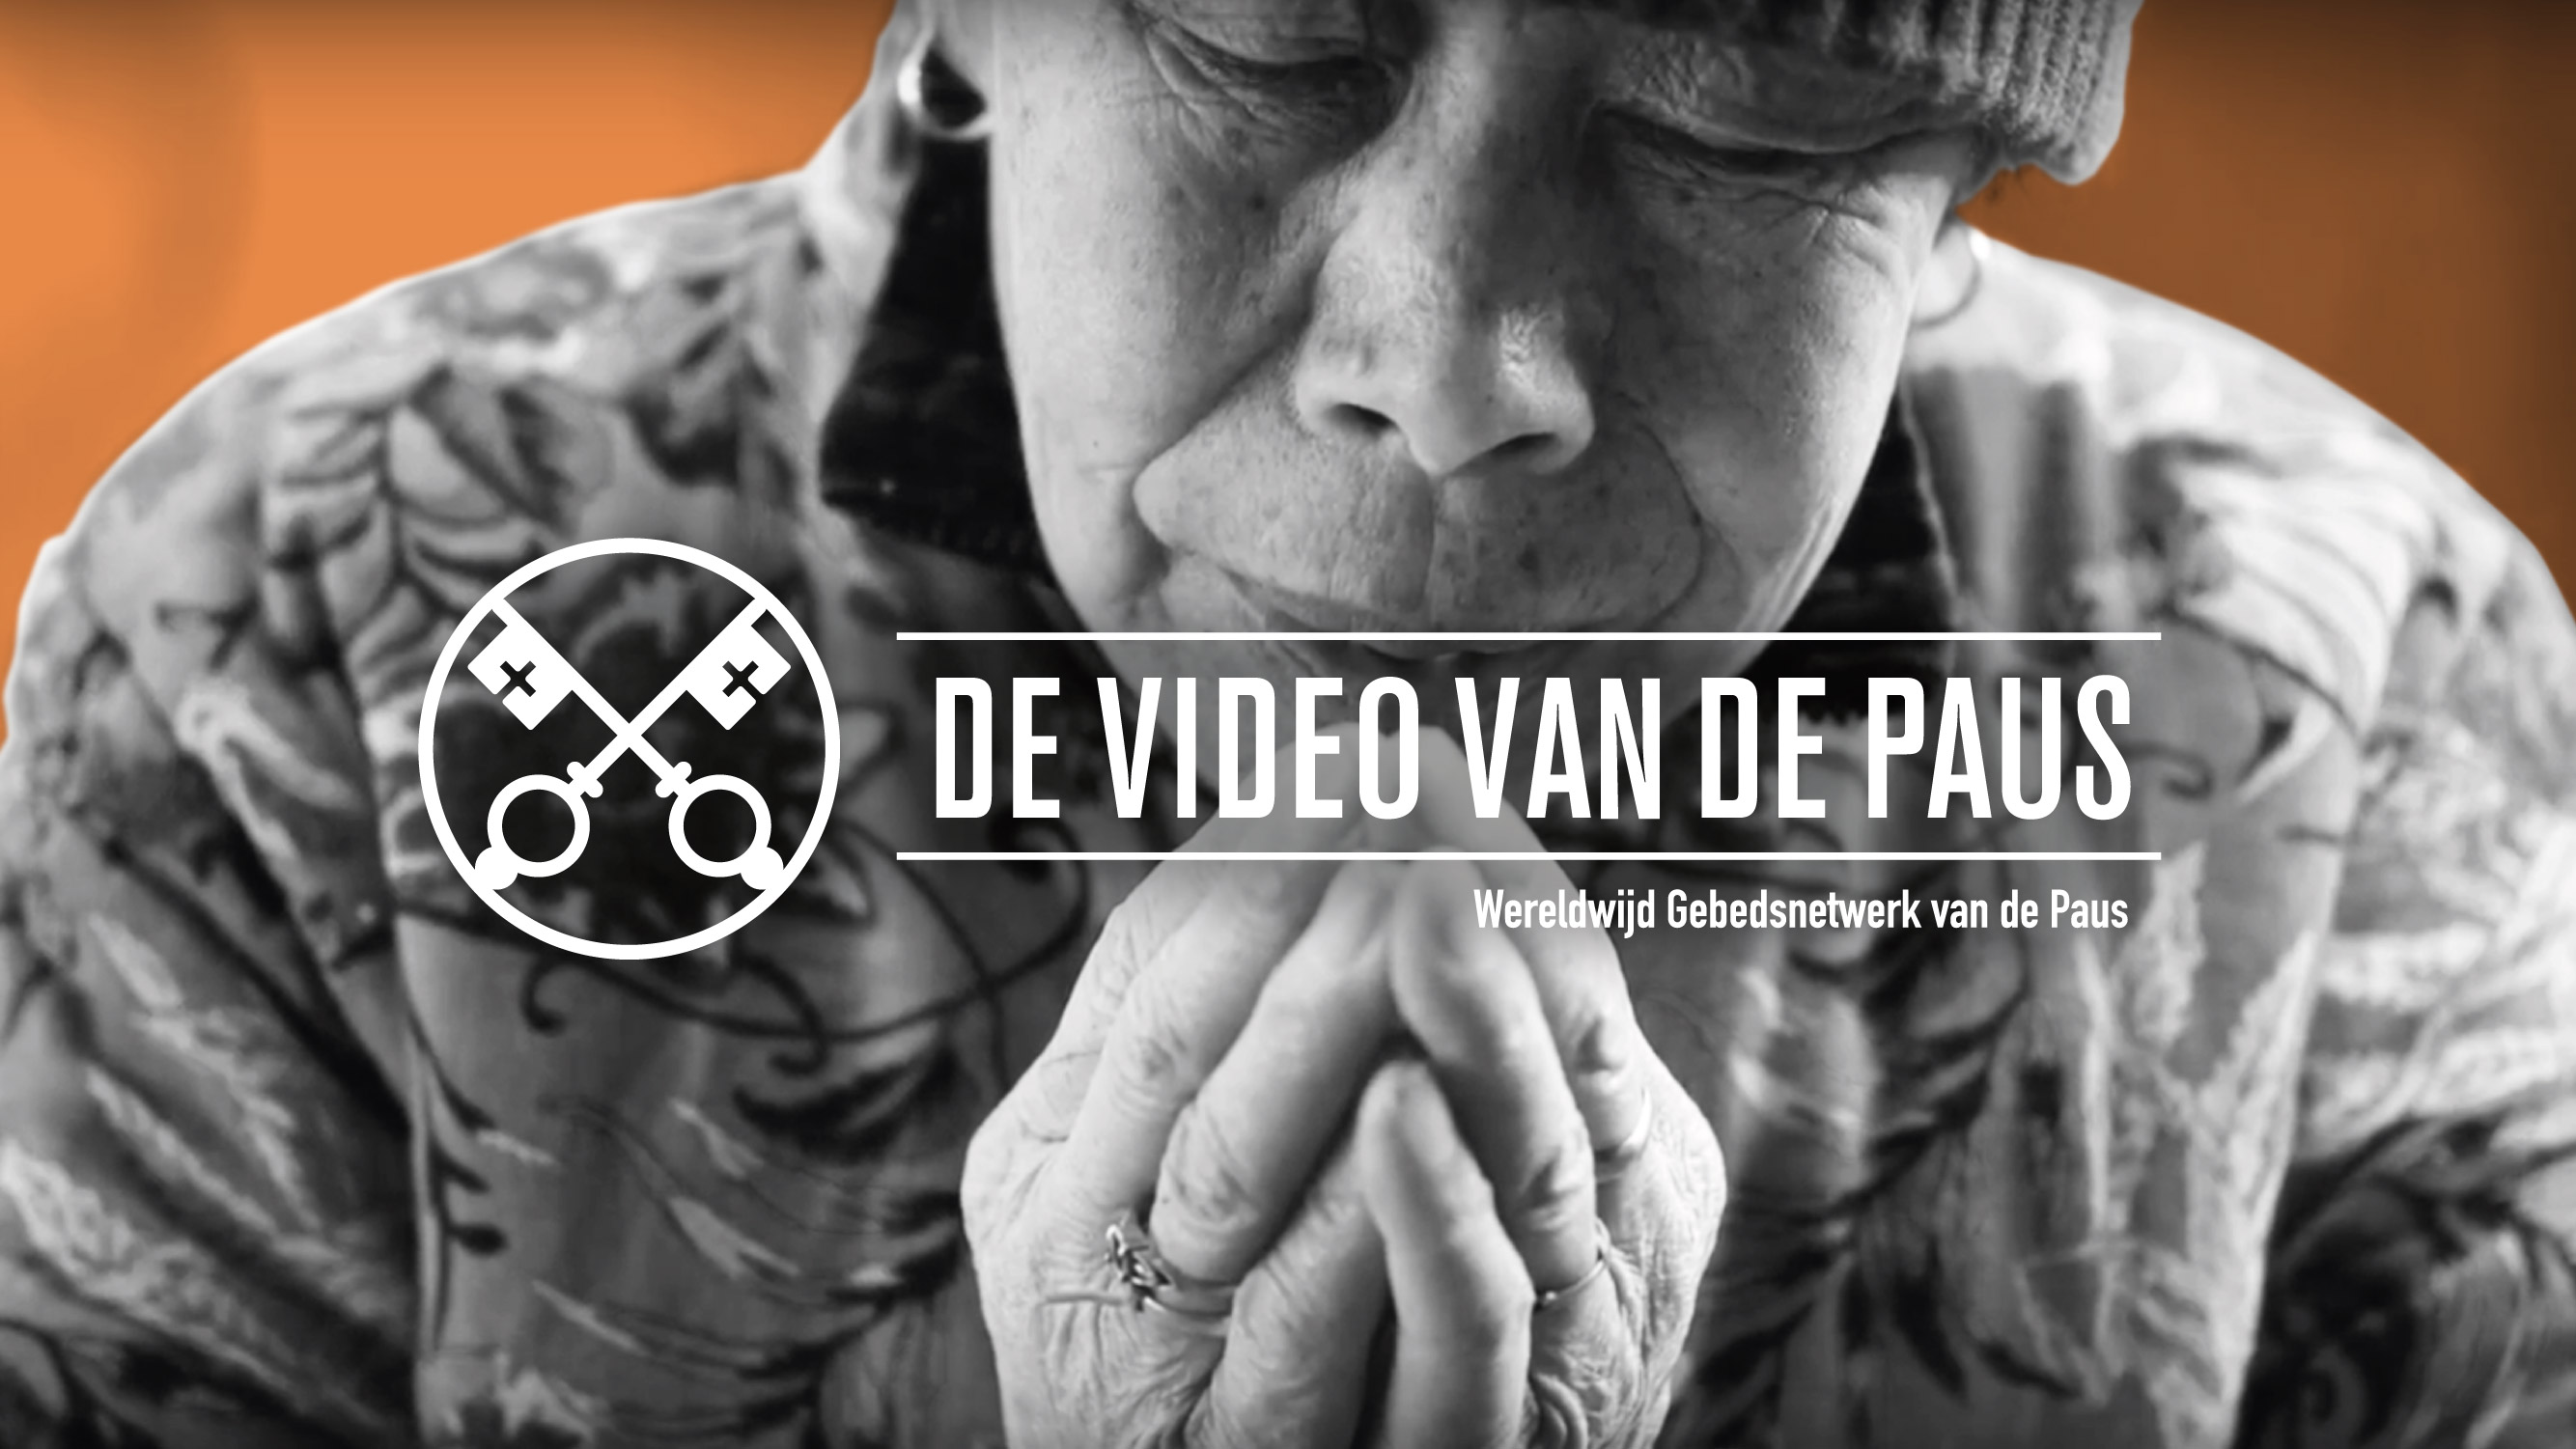 Official Image - TPV 3 2020 NL - De Video van de Paus - Katholieken in China